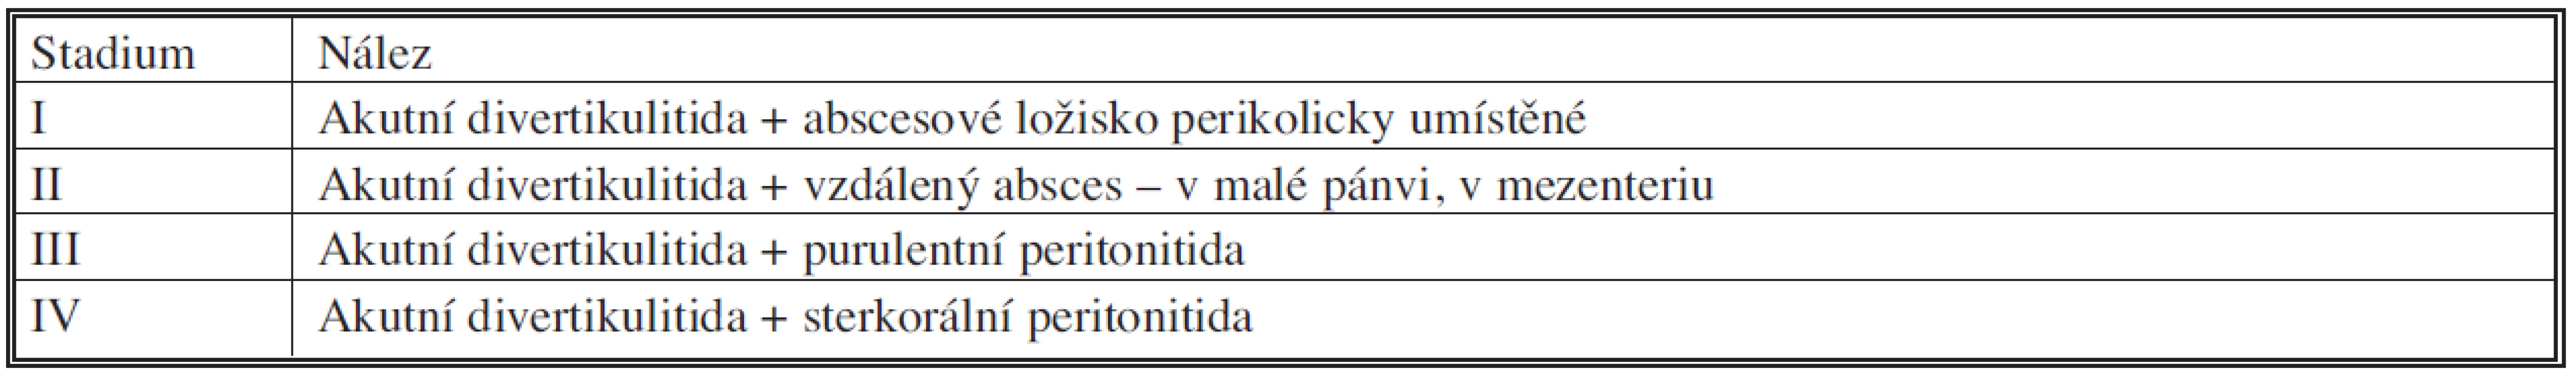 Klasifikace komplikované divertikulitidy podle Hincheyho (1978)
Tab. 3. Classification of complicated diverticulitis according to Hinchey (1978)